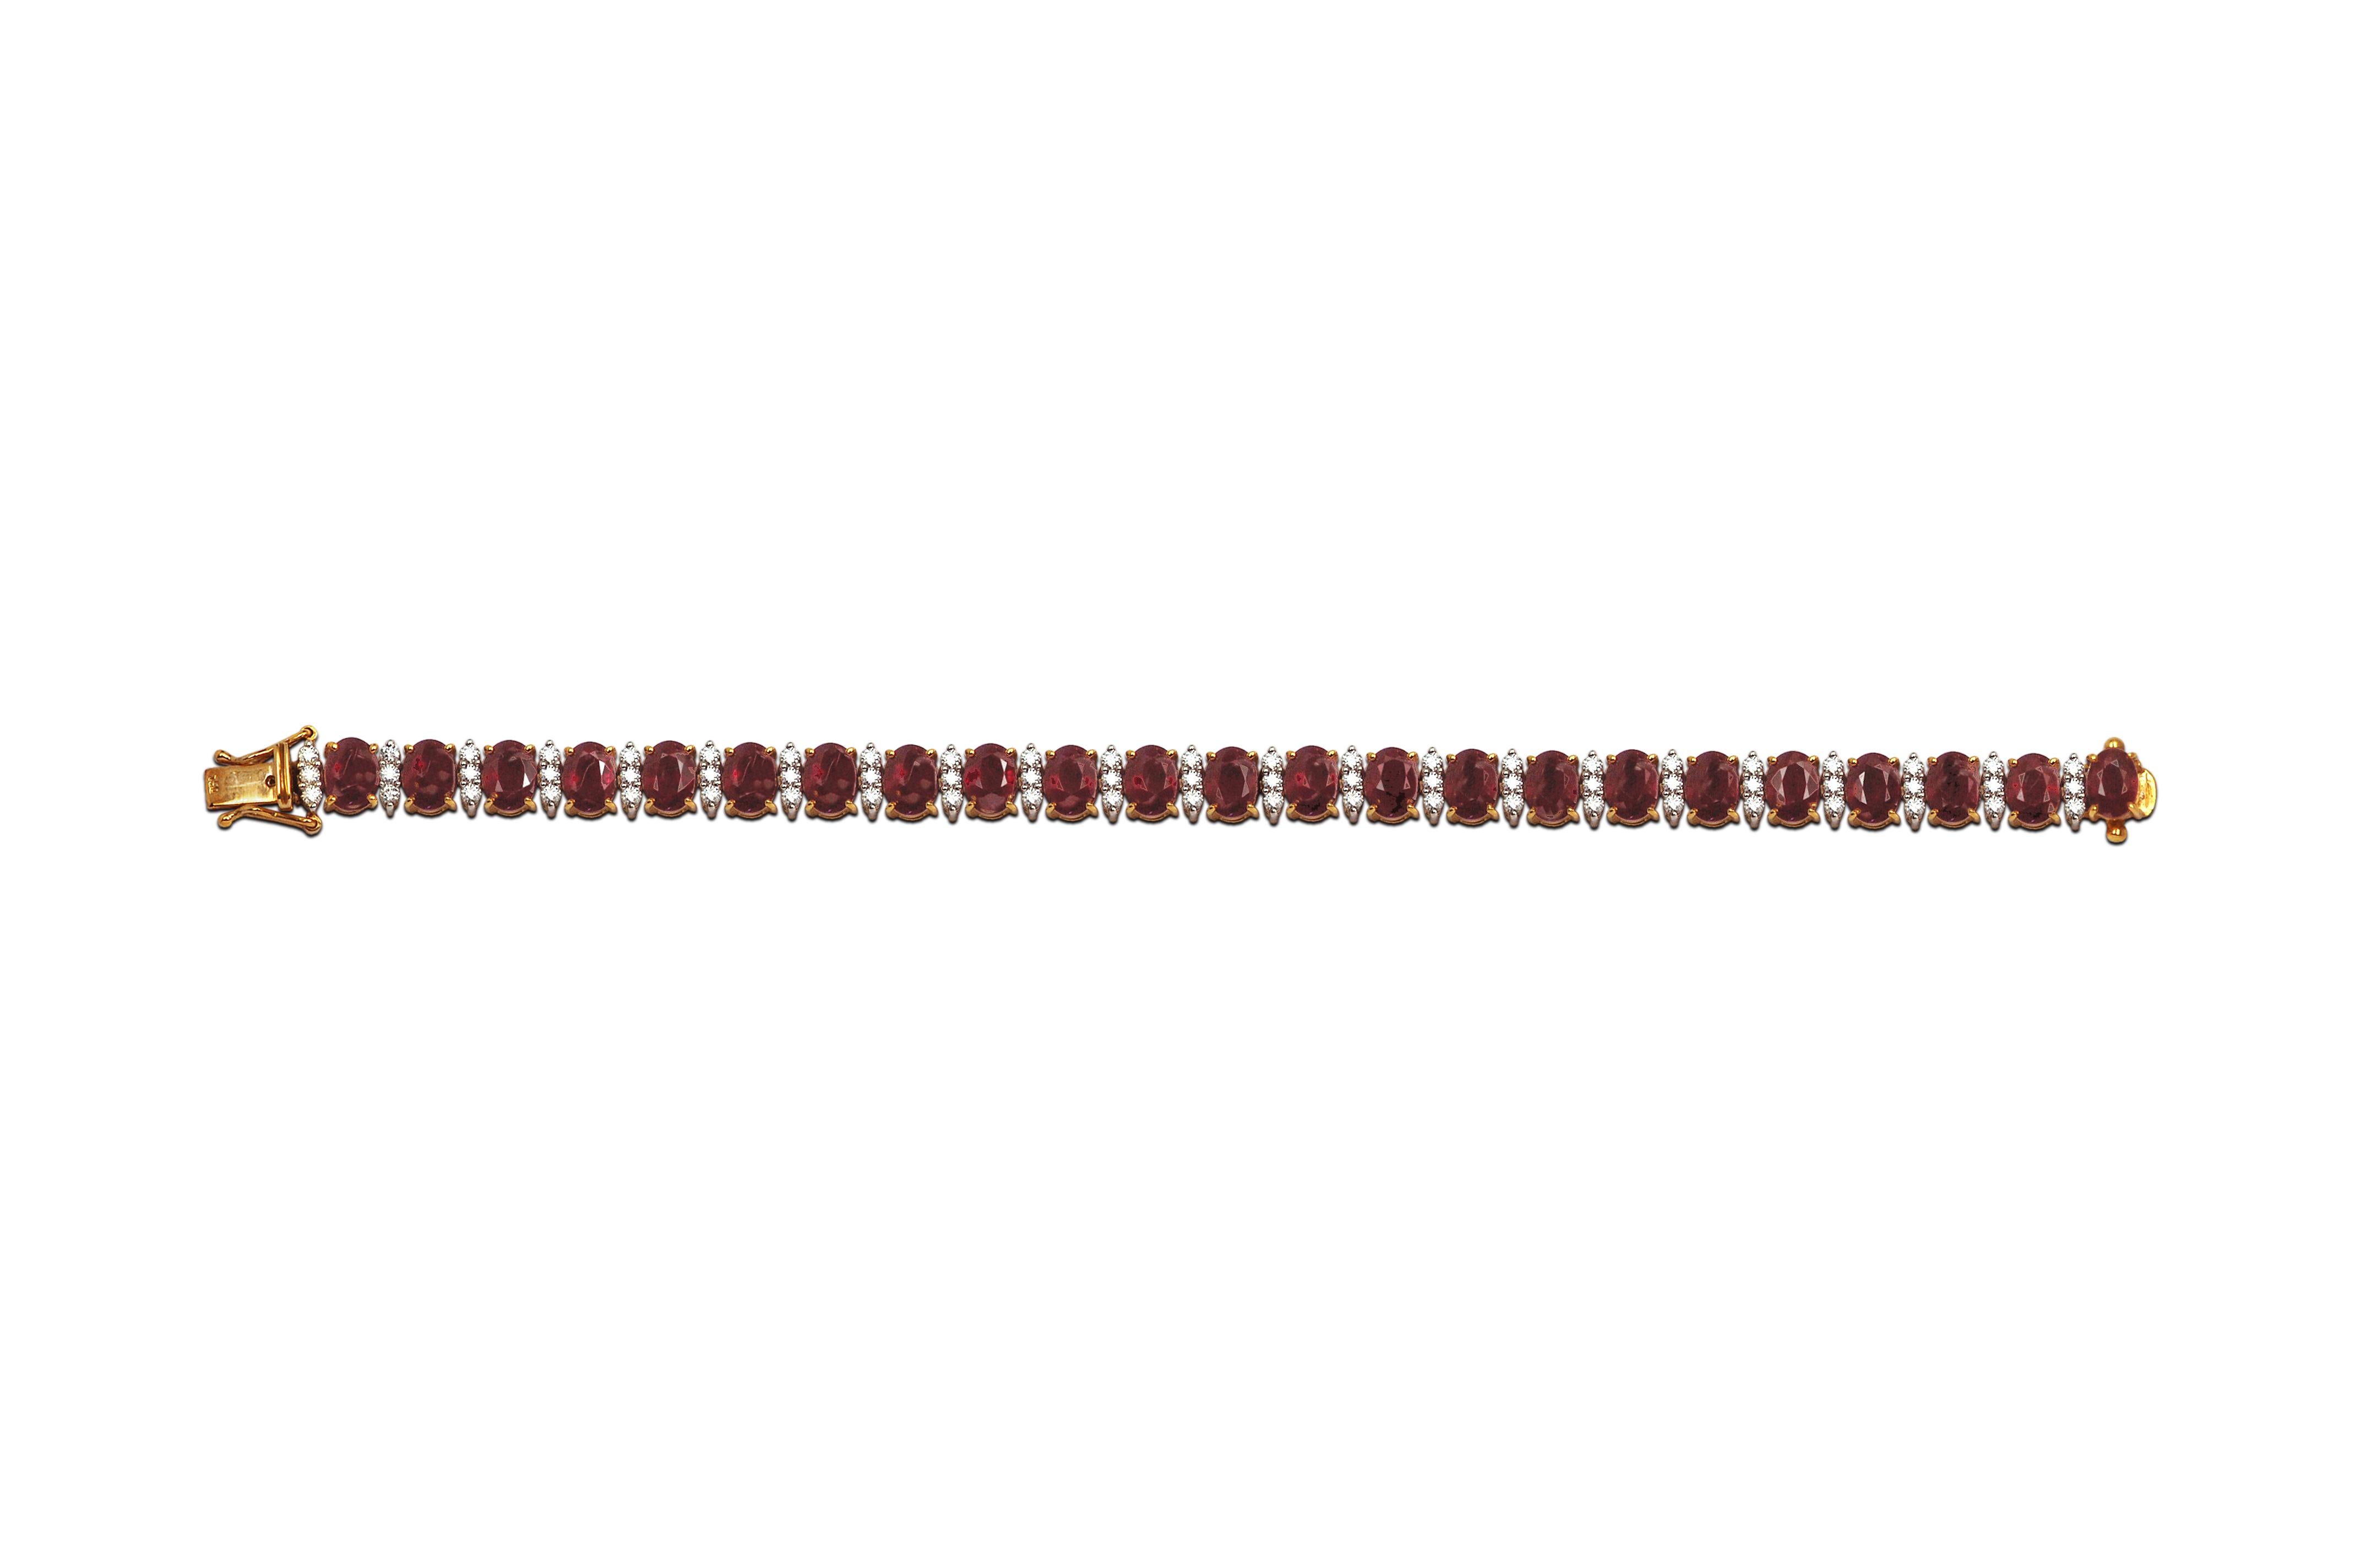 Ruby 22.06 carats with Diamond 1.75 carats Bracelet set in 18 Karat Gold Settings

Width: 0.6 cm
Length: 18.5 cm 


